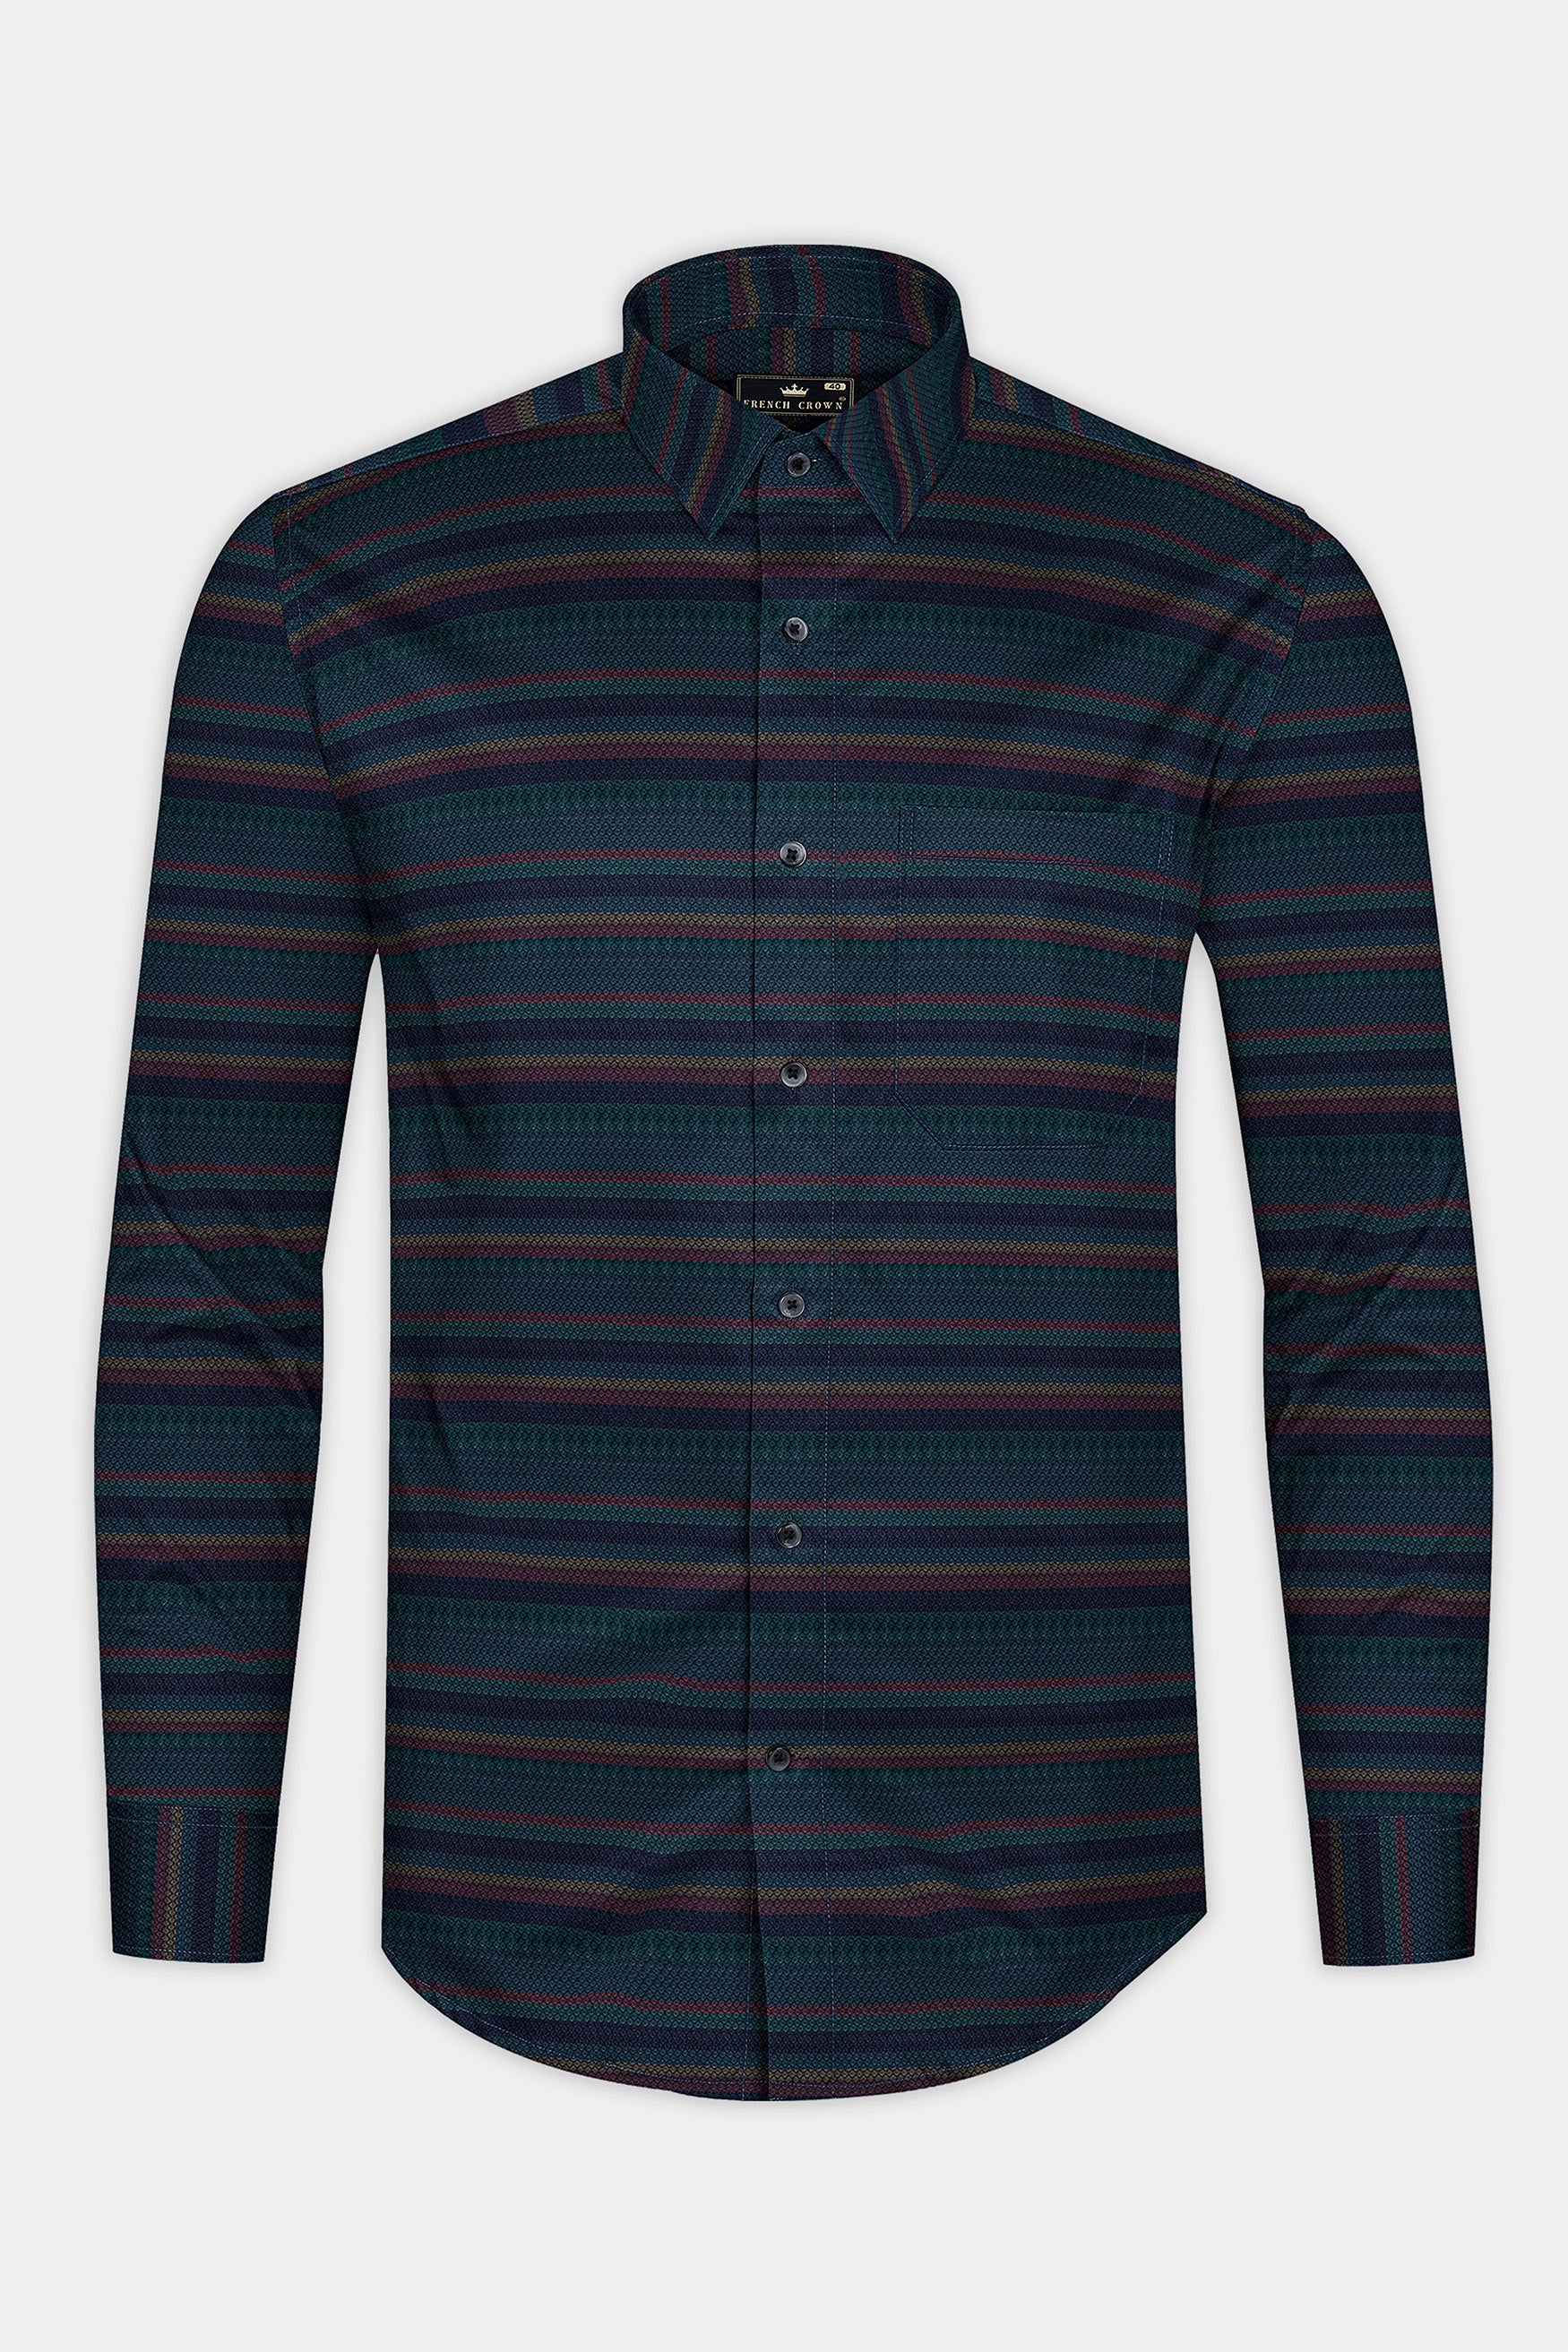 Tiber Blue And Eclipse Maroon Jacquard Textured Premium Giza Cotton Shirt